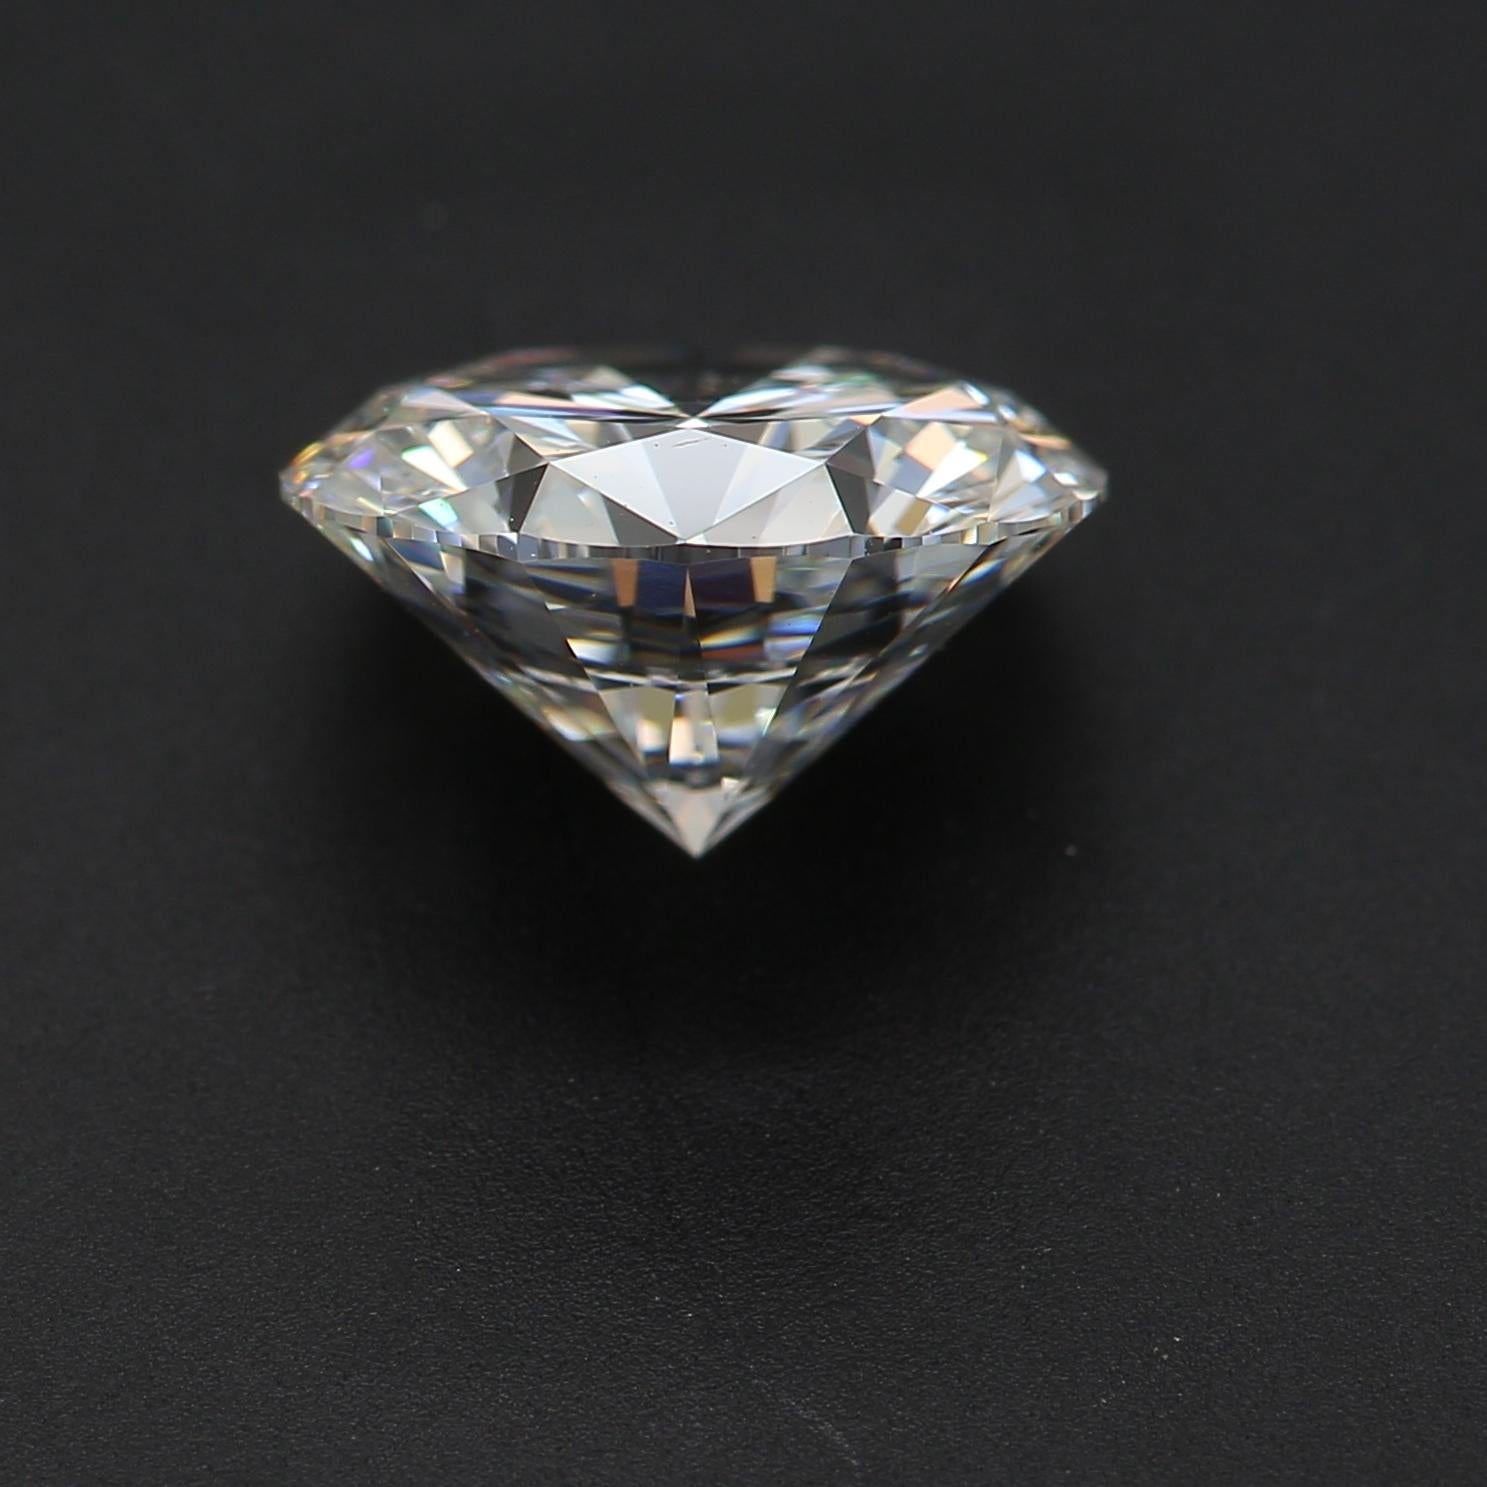 Women's or Men's 2.02 Carat Round Cut Diamond VVS1 Clarity GIA Certified For Sale